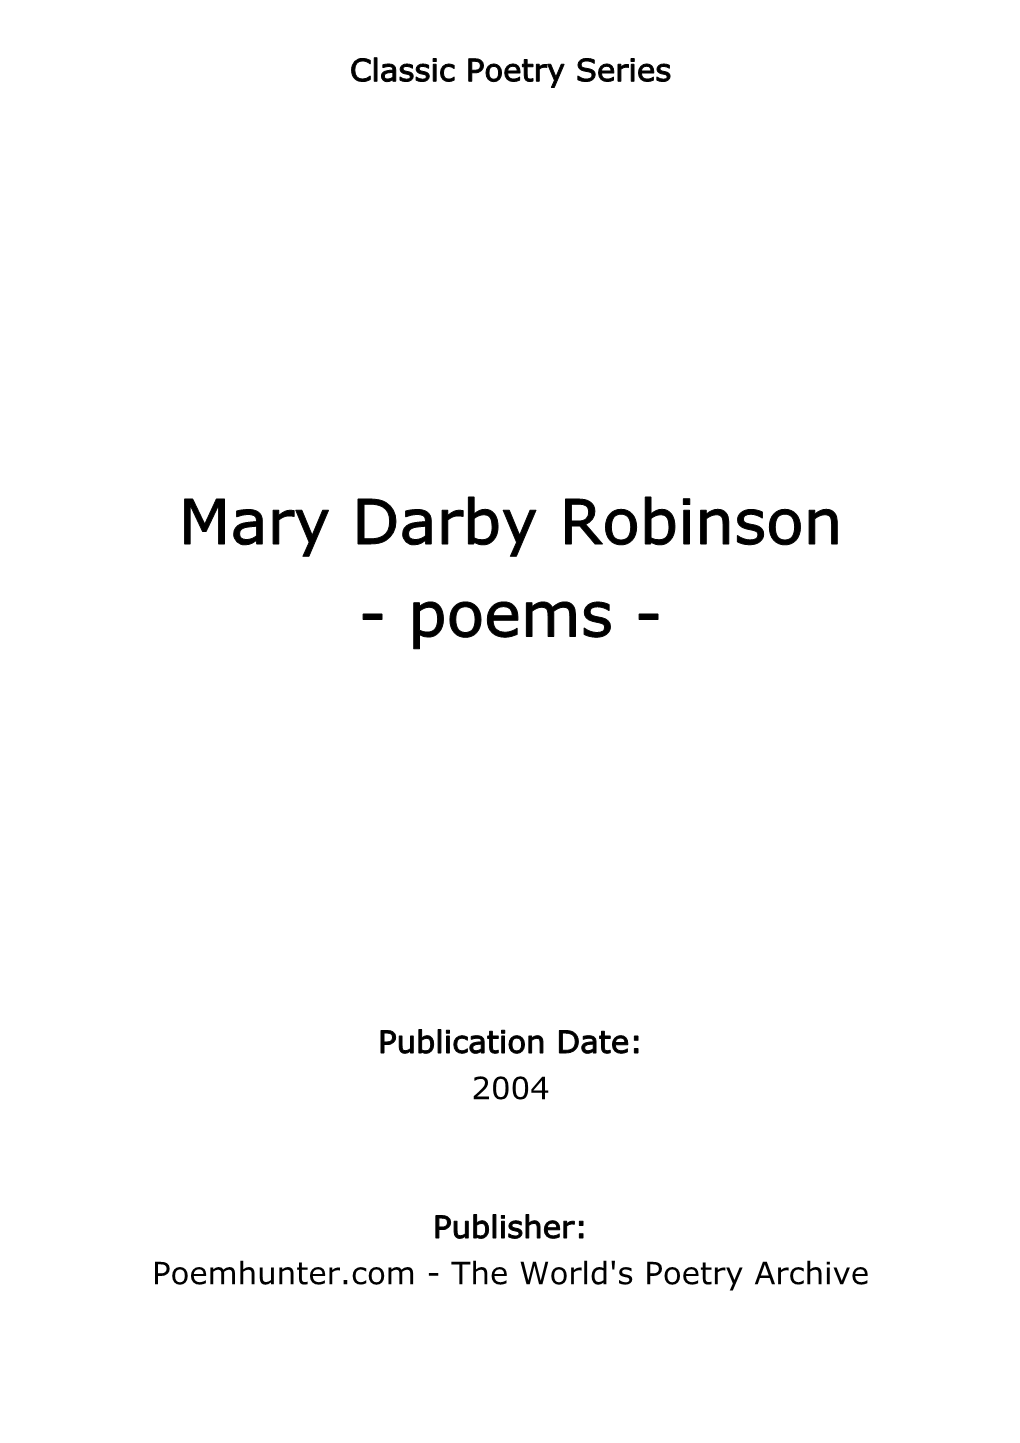 Mary Darby Robinson - Poems